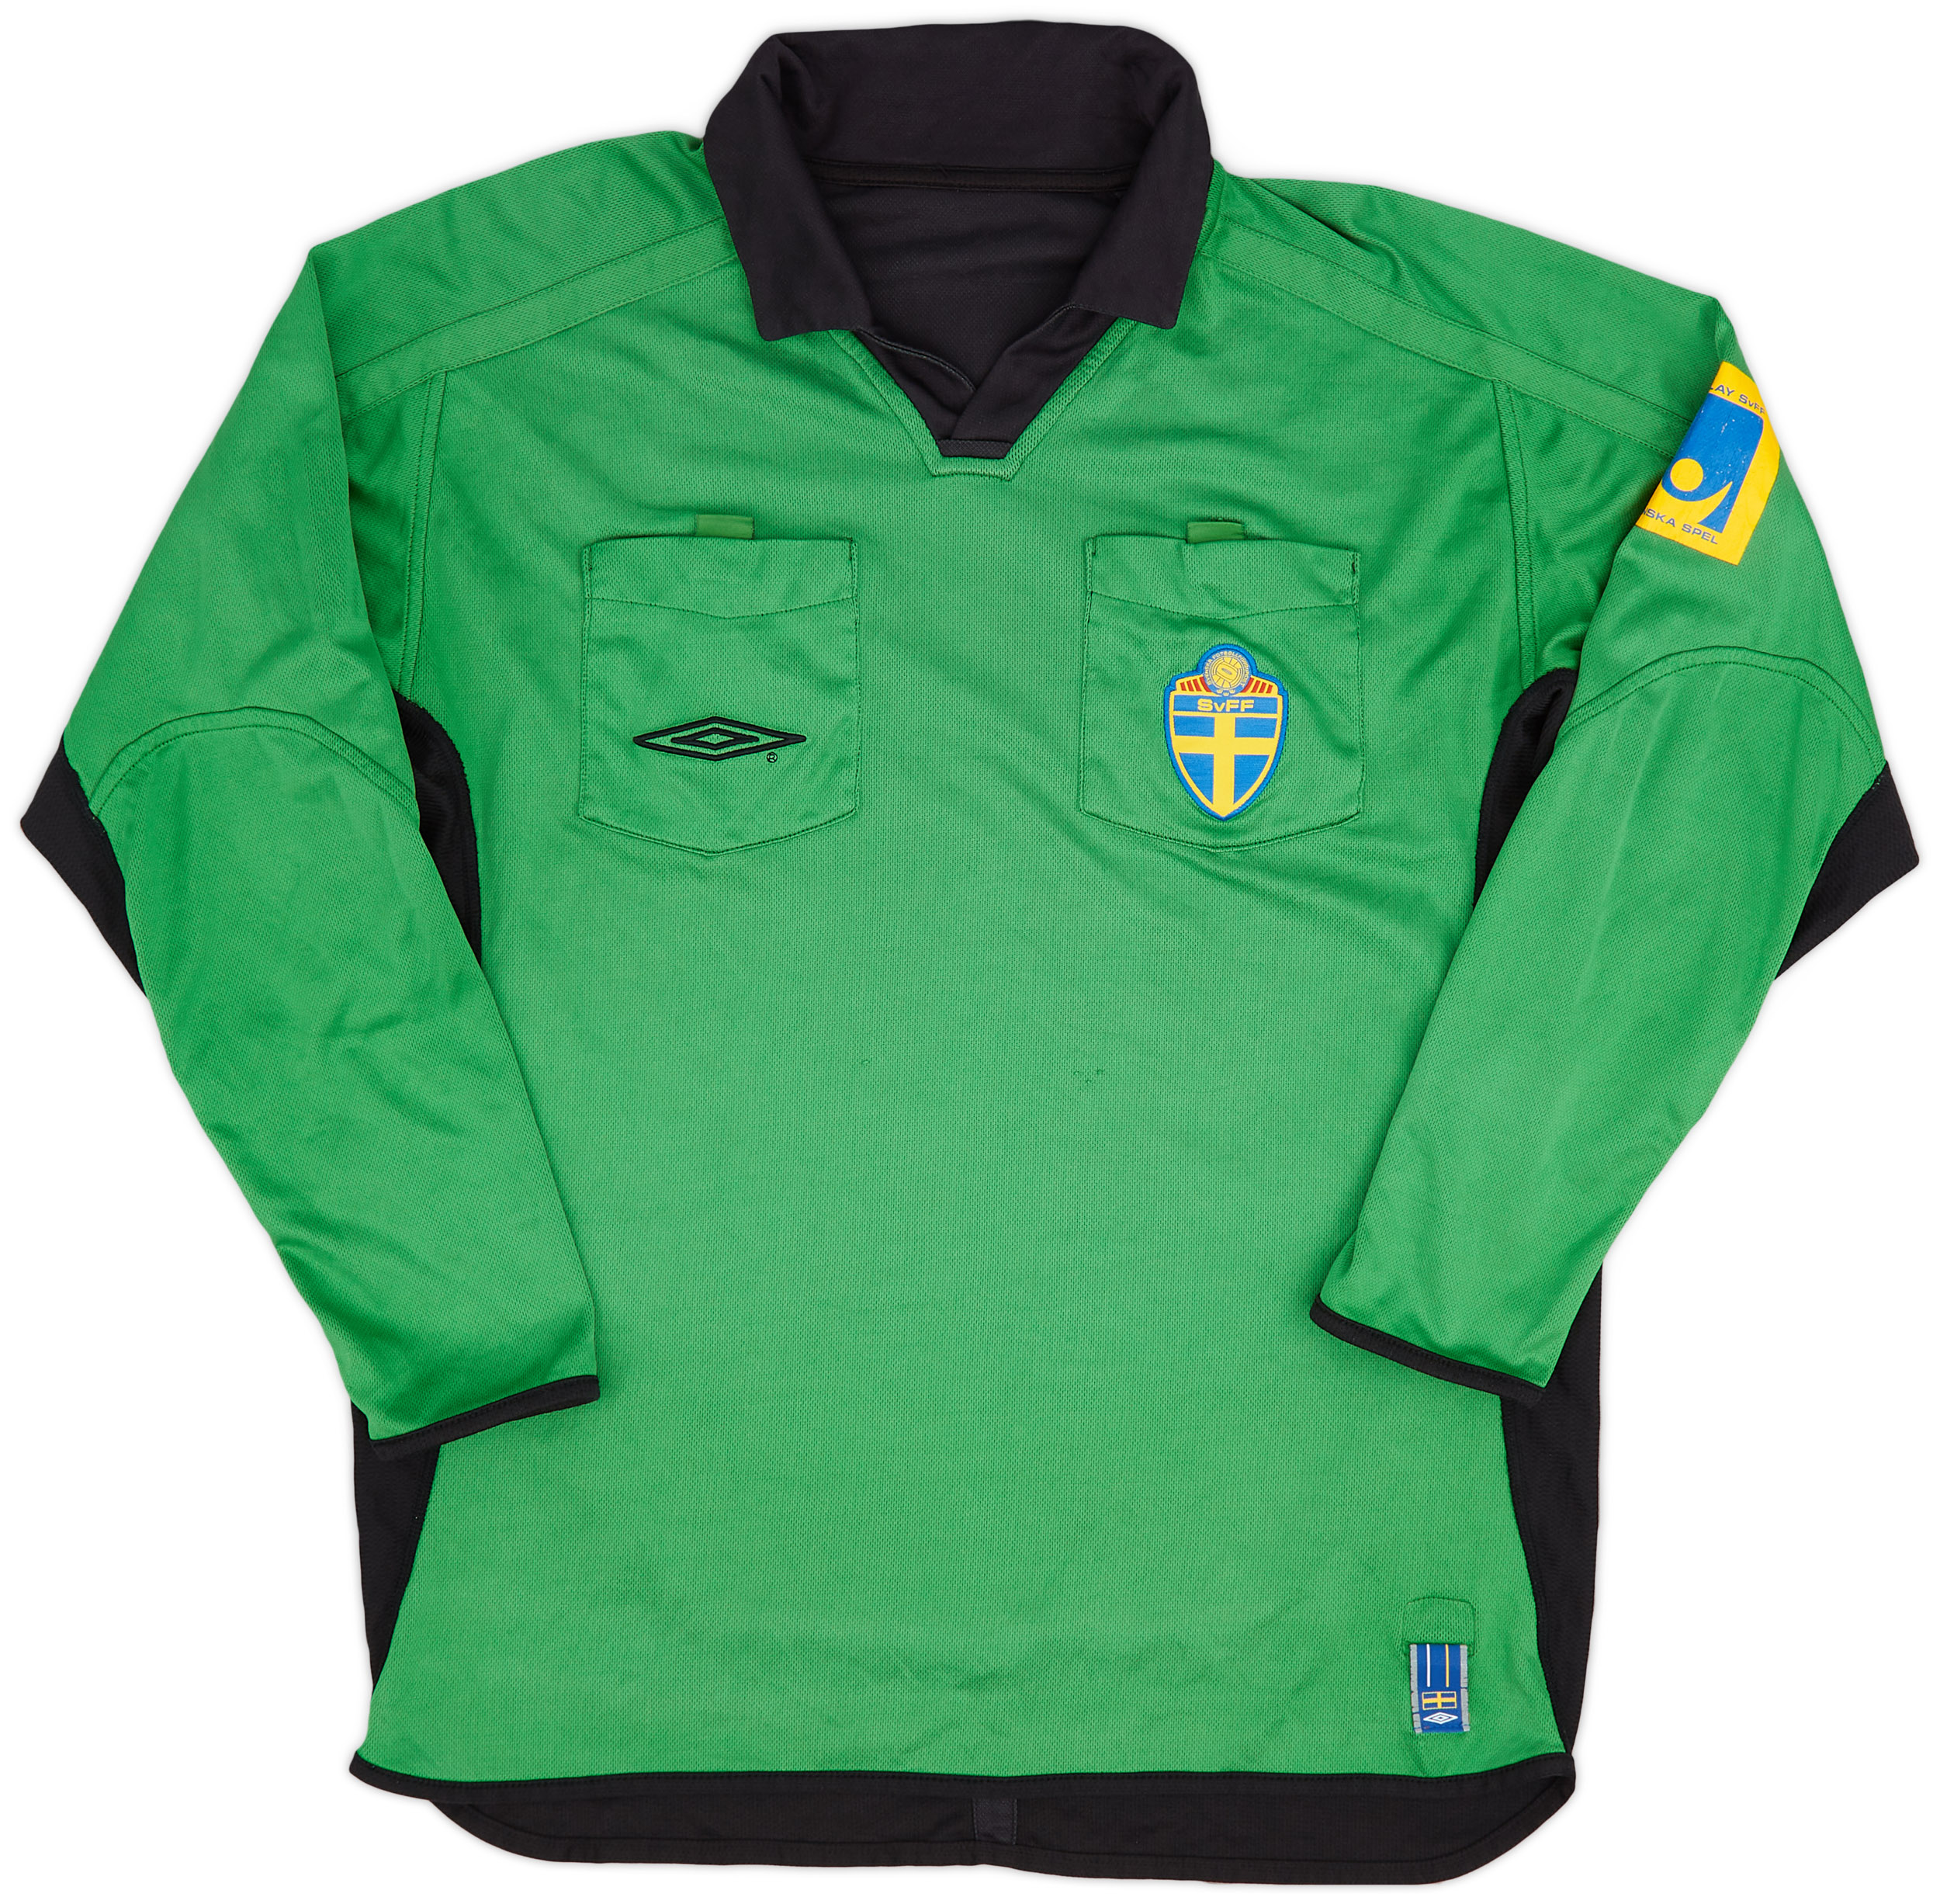 2000s Sweden Umbro Referee Shirt - 7/10 - ()